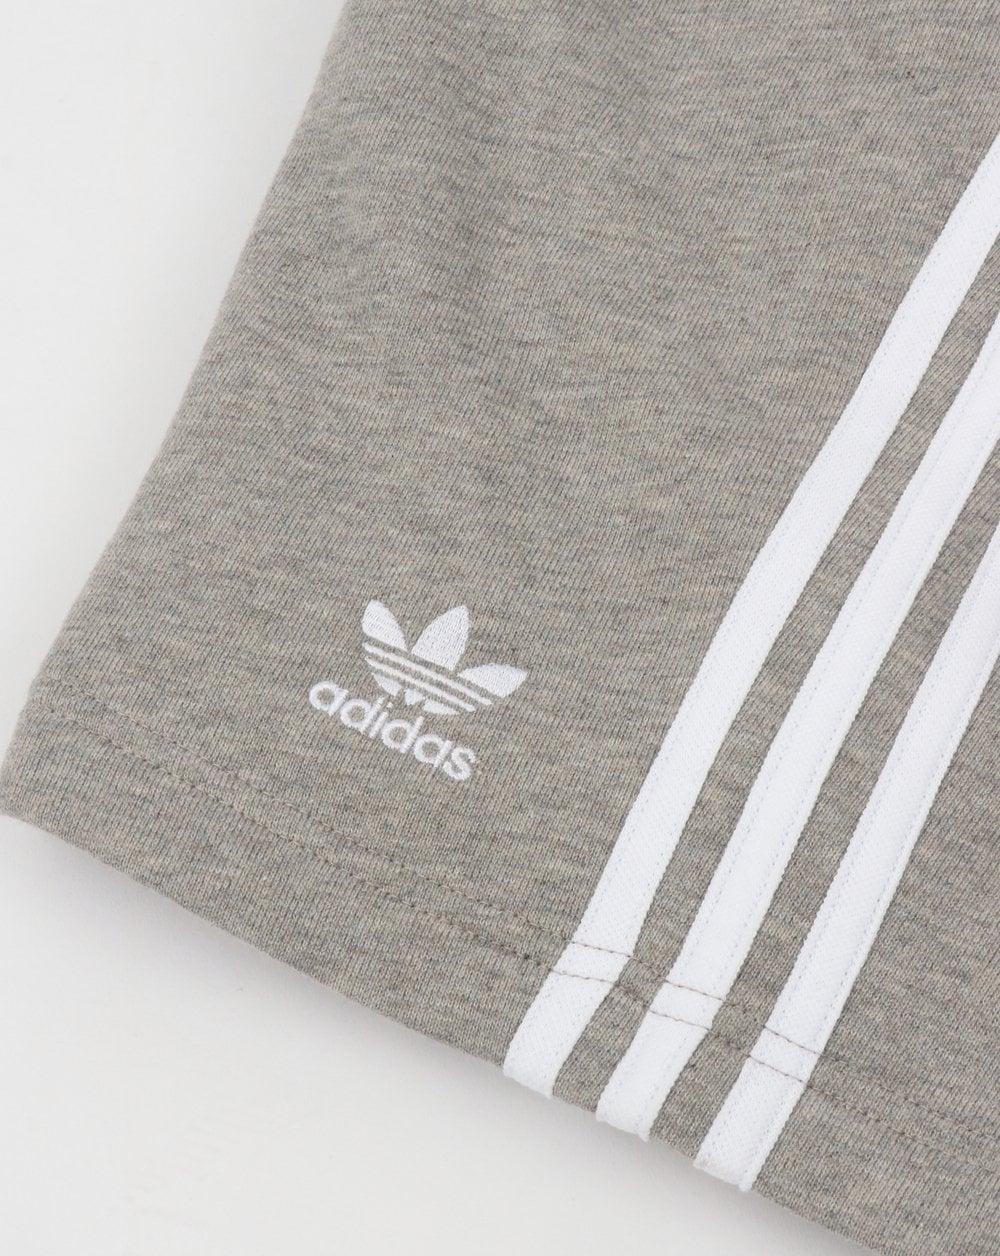 Adidas Grey Logo - Adidas Originals 3 Stripes Shorts Grey Heather, cotton, terry, toweling